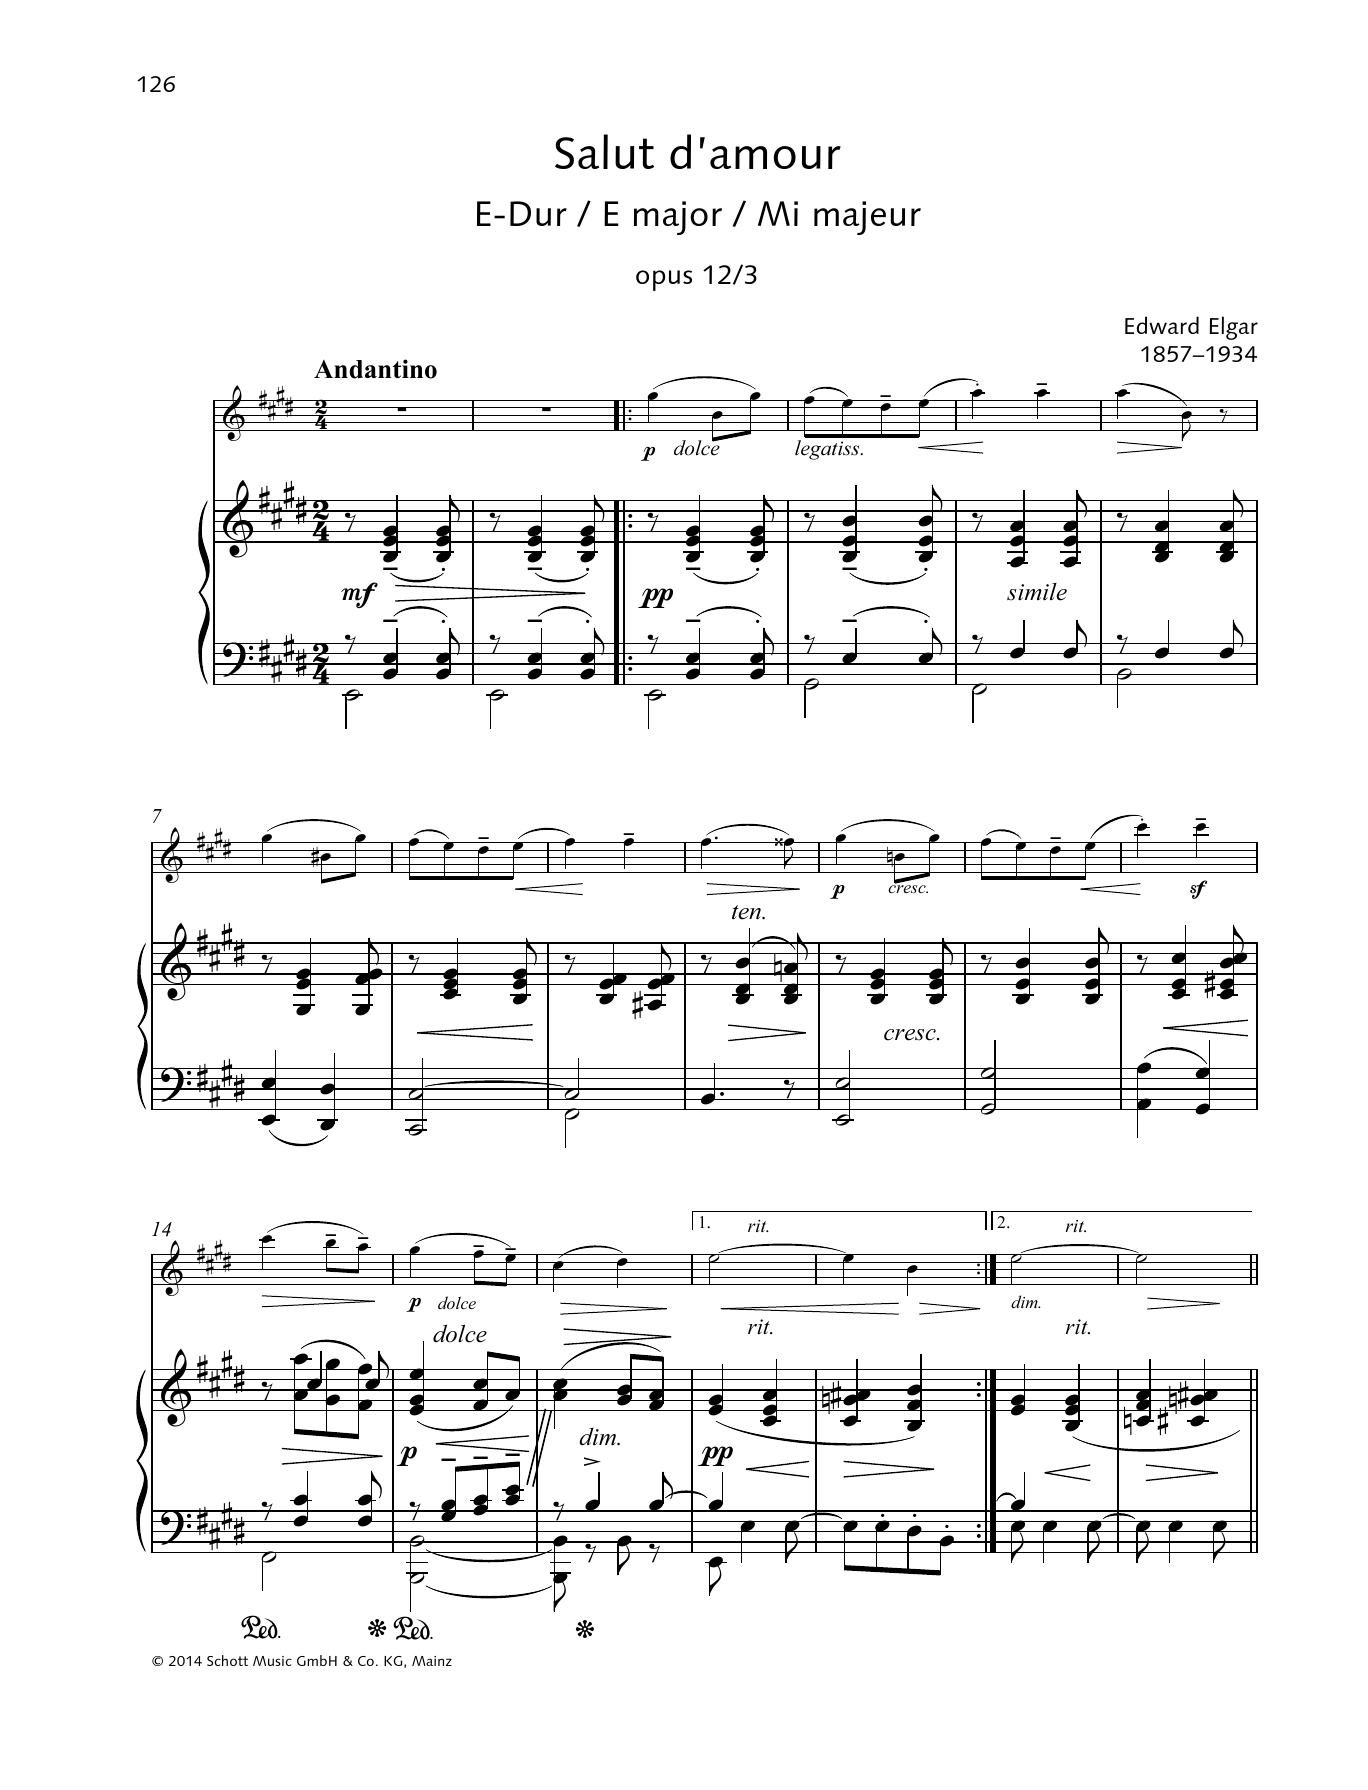 Download Edward Elgar Salut d'amour E major Sheet Music